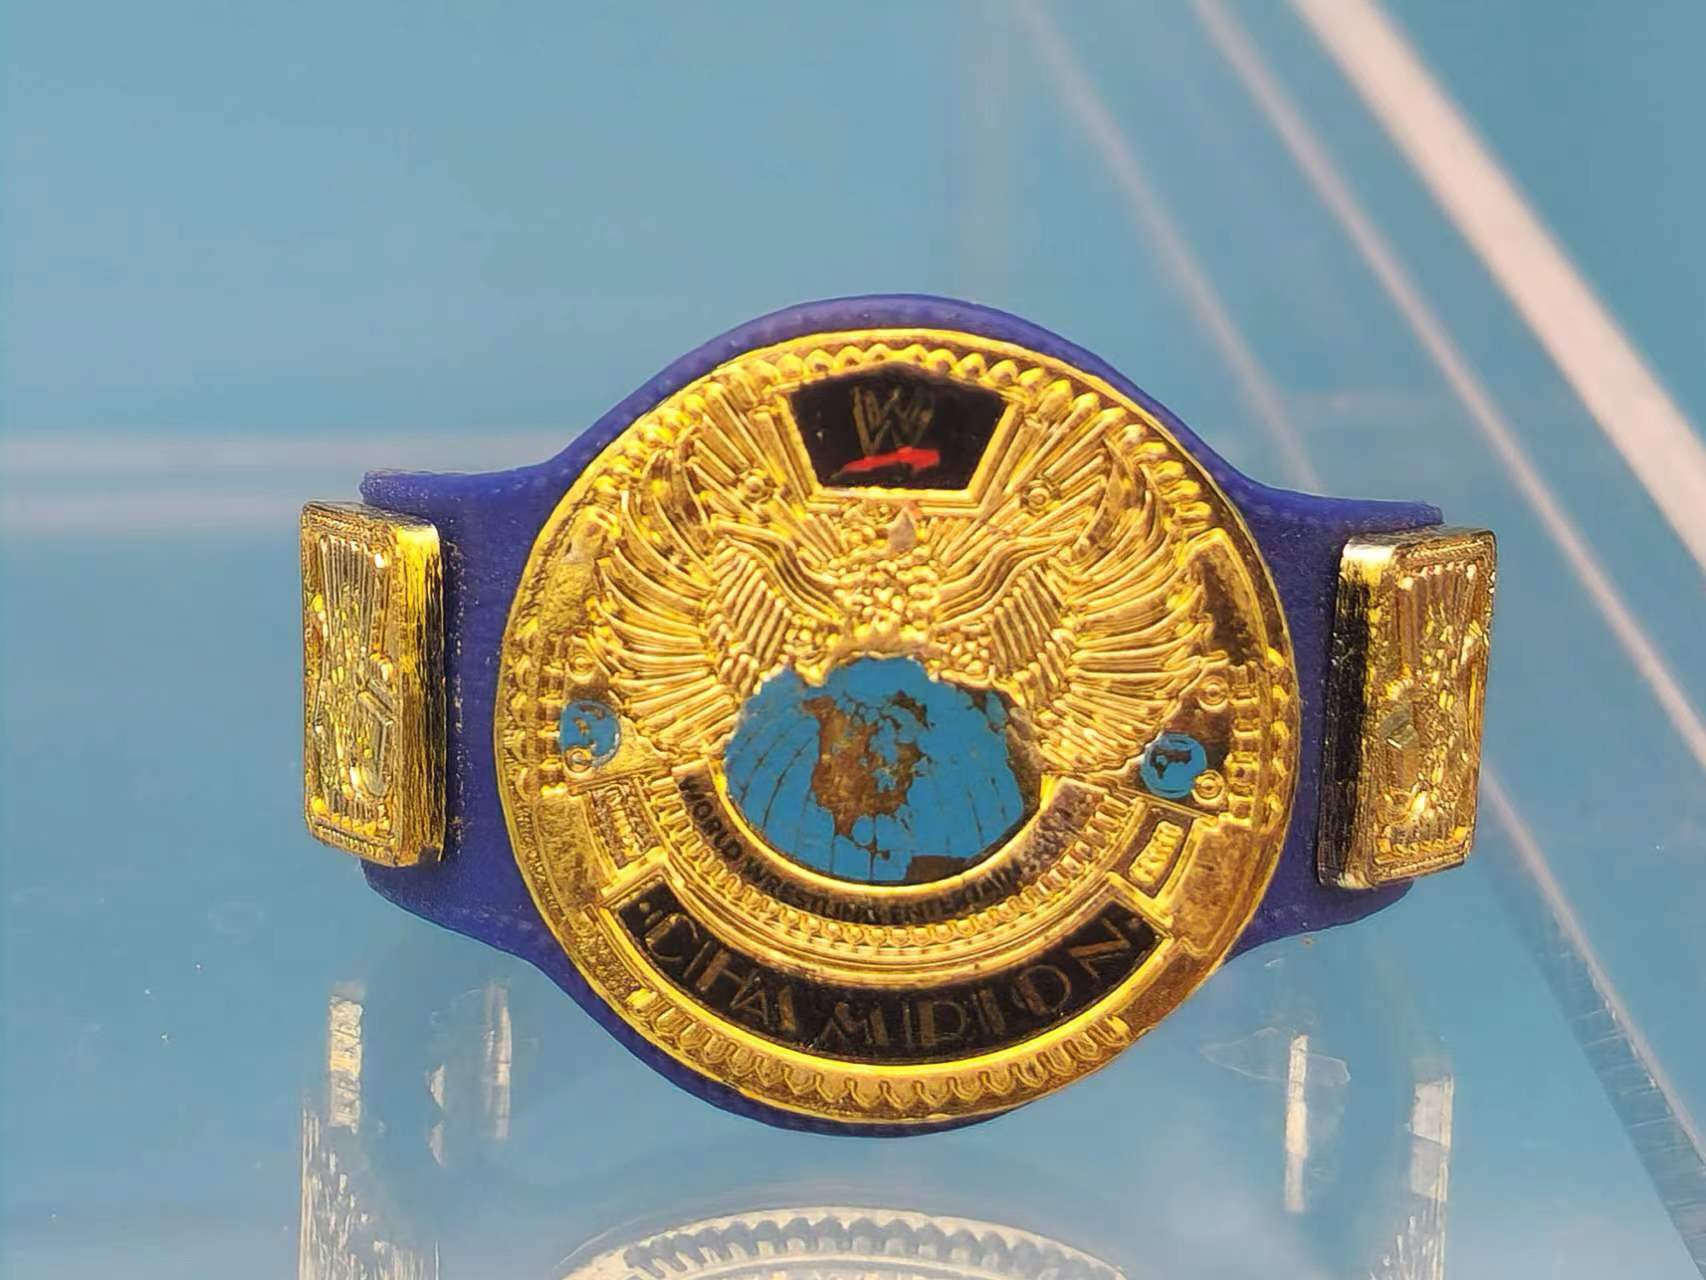 WWE Mattel Accessories Attitude Era Champion Figure Belt (Purple Edition)